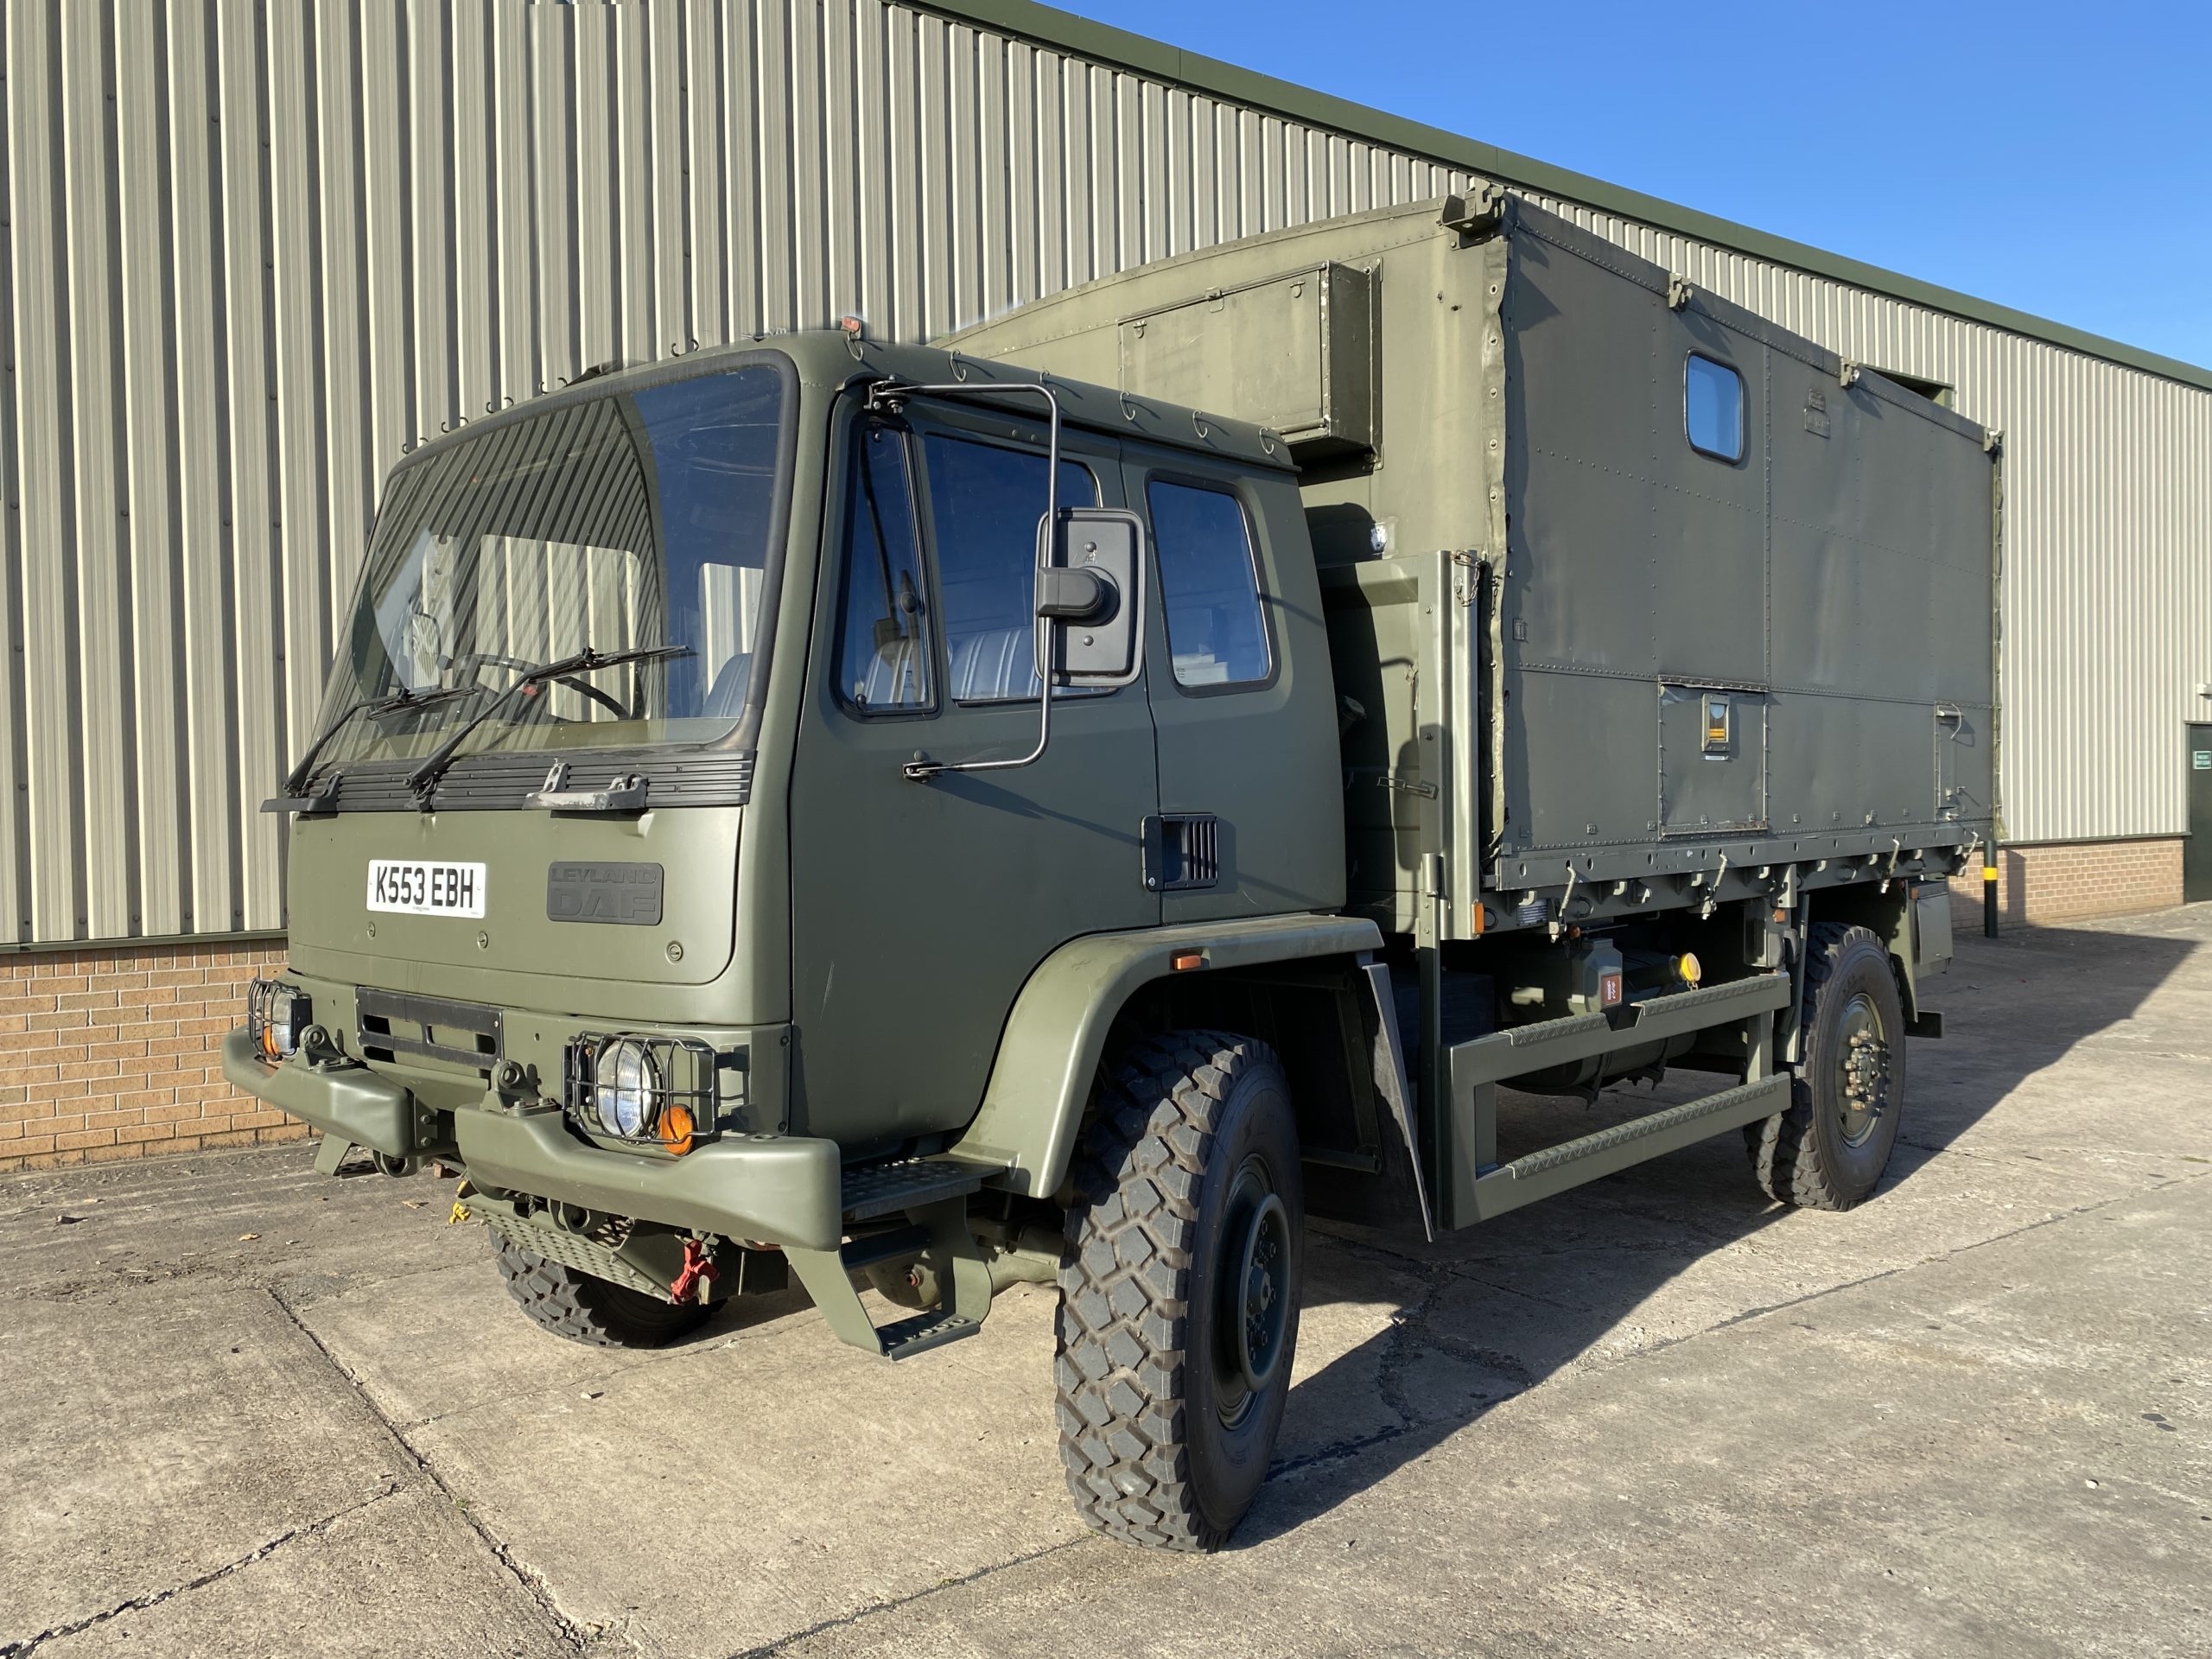 Leyland Daf 4×4 Box Truck Road Registered - ex military vehicles for sale, mod surplus